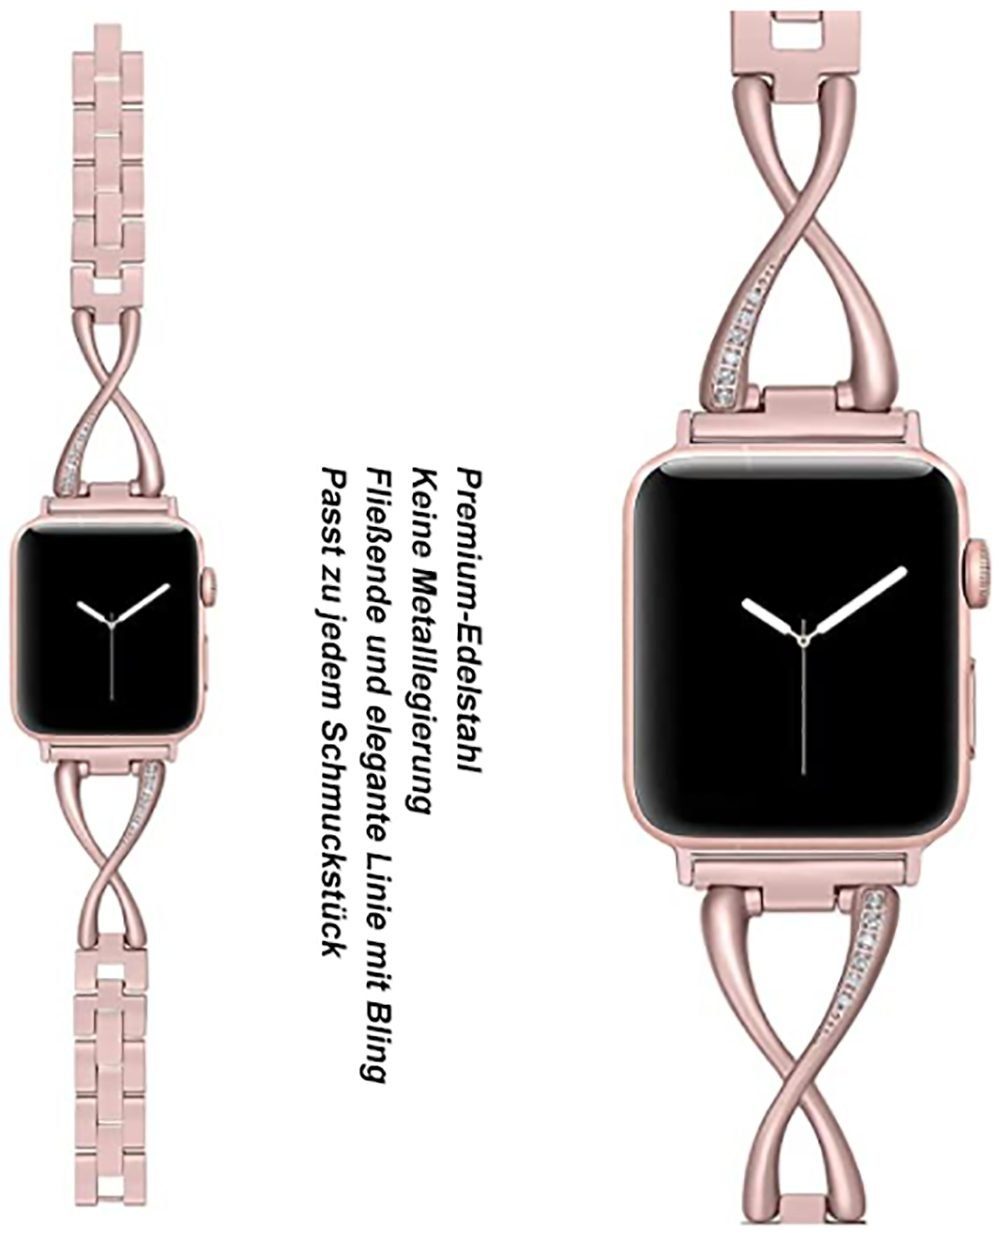 Band,Uhrenarmbänder,für 1-7,42/44mm Smartwatch-Armband apple Rosa watch Watch Diida